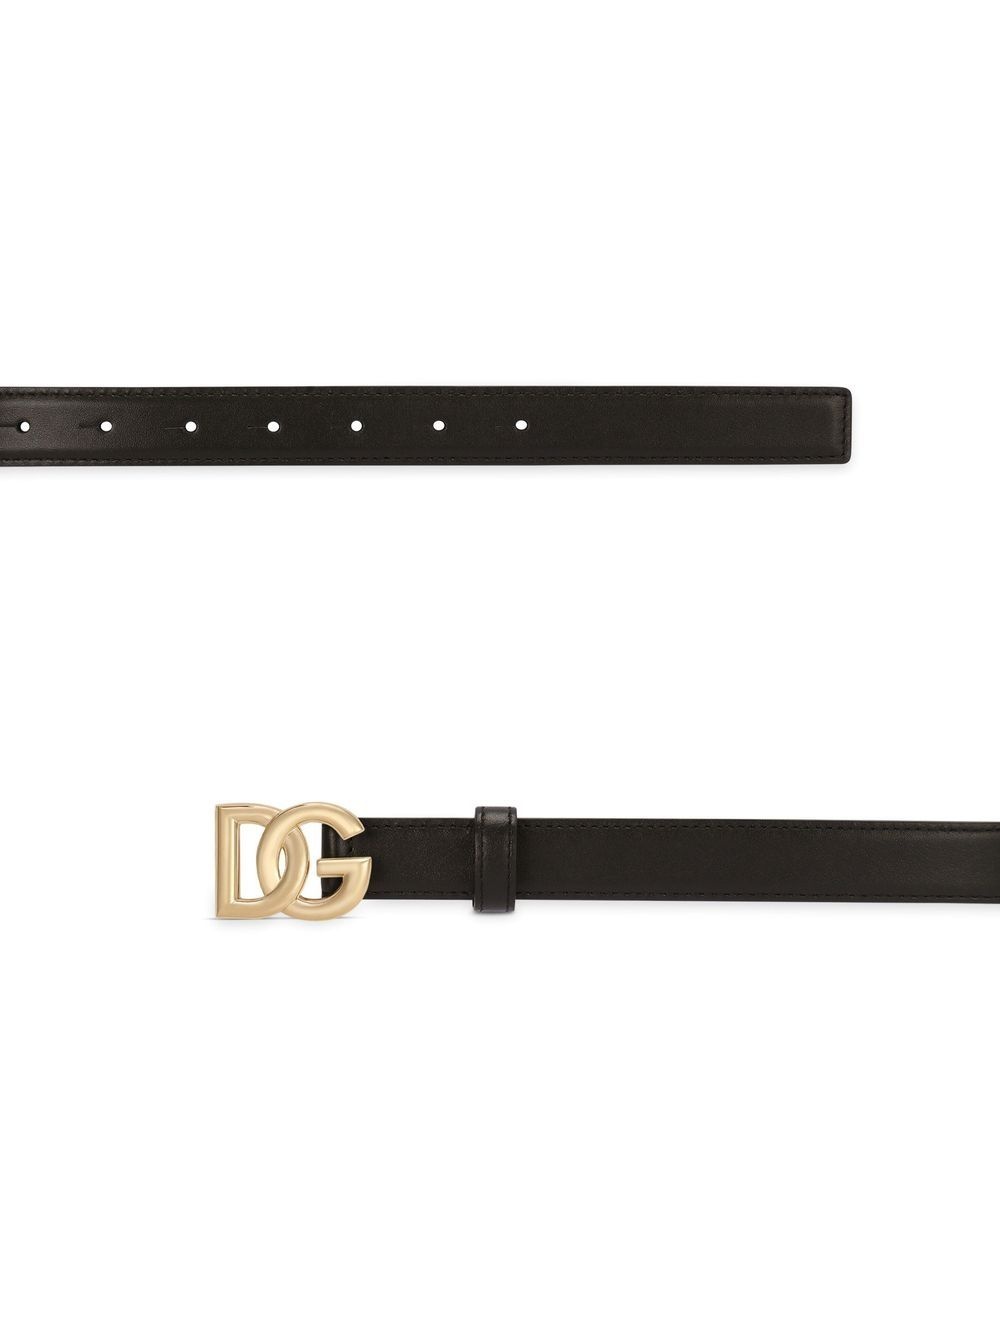 Dg logo leather belt - 2